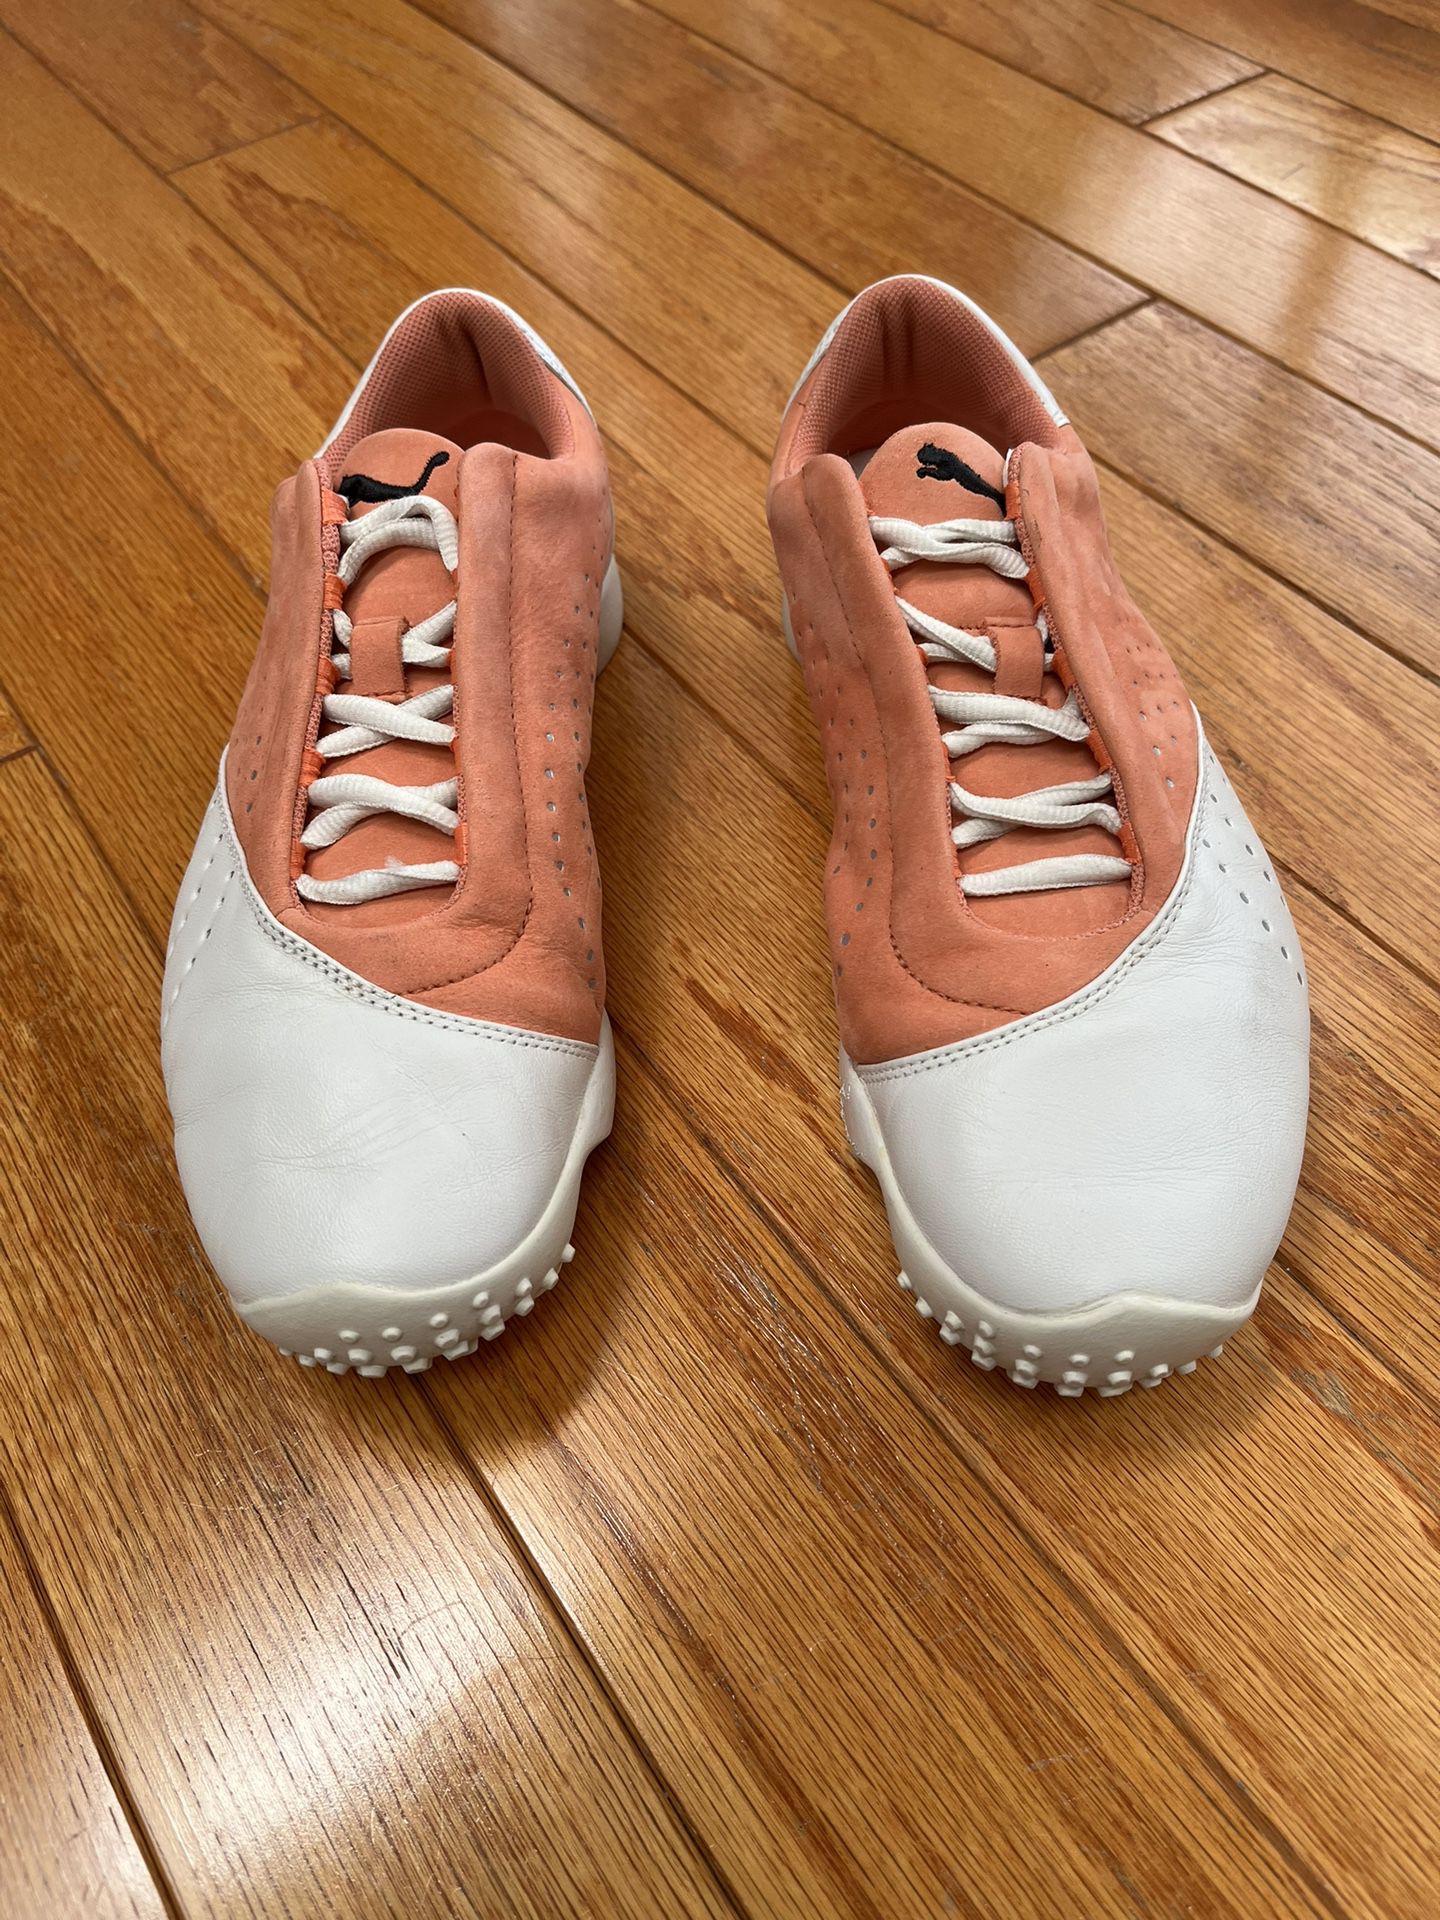  Women’s Leather Golf Shoes Puma